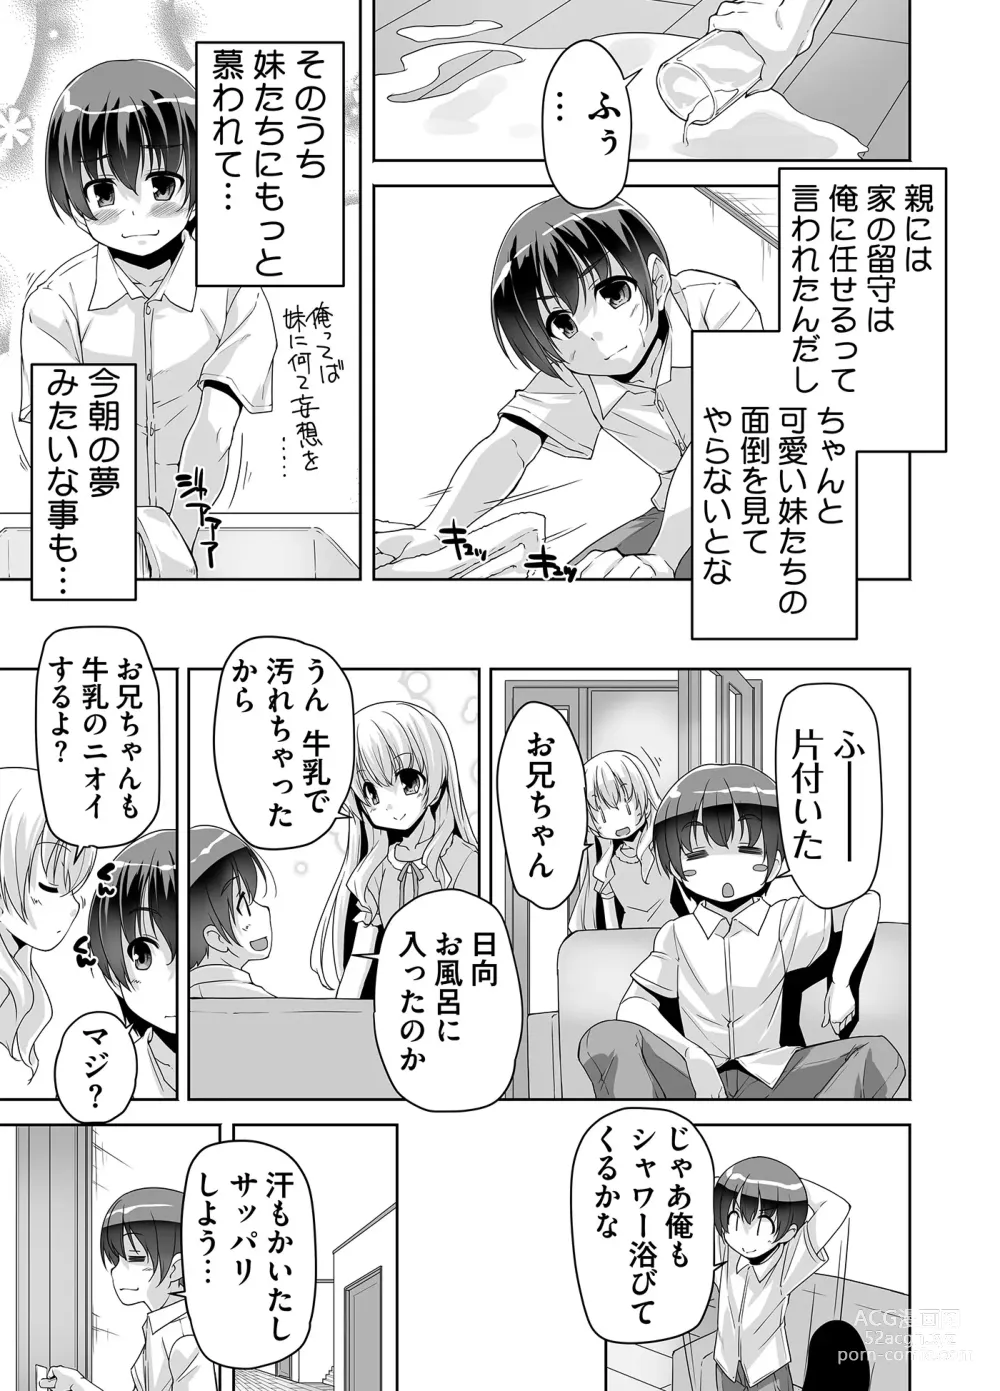 Page 9 of manga Imouto Paradise! 3 Adult Edition